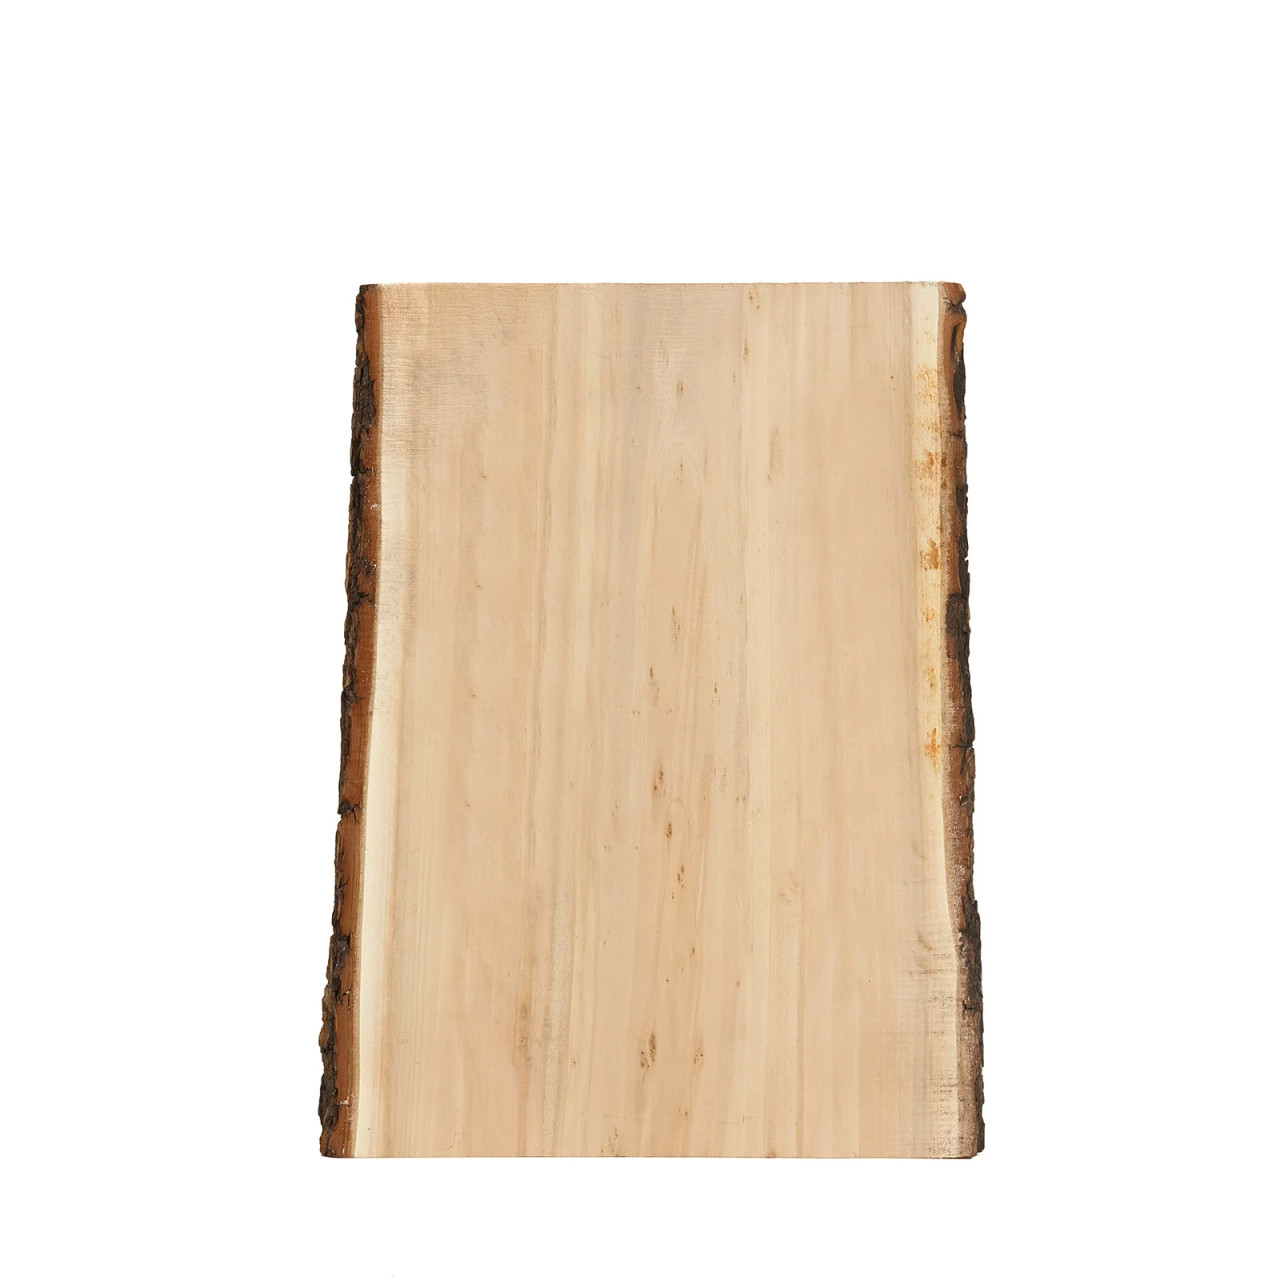 Case of 12 Rustic Natural Wood Slices, Rectangular Poplar Wood Slabs -  16x13 